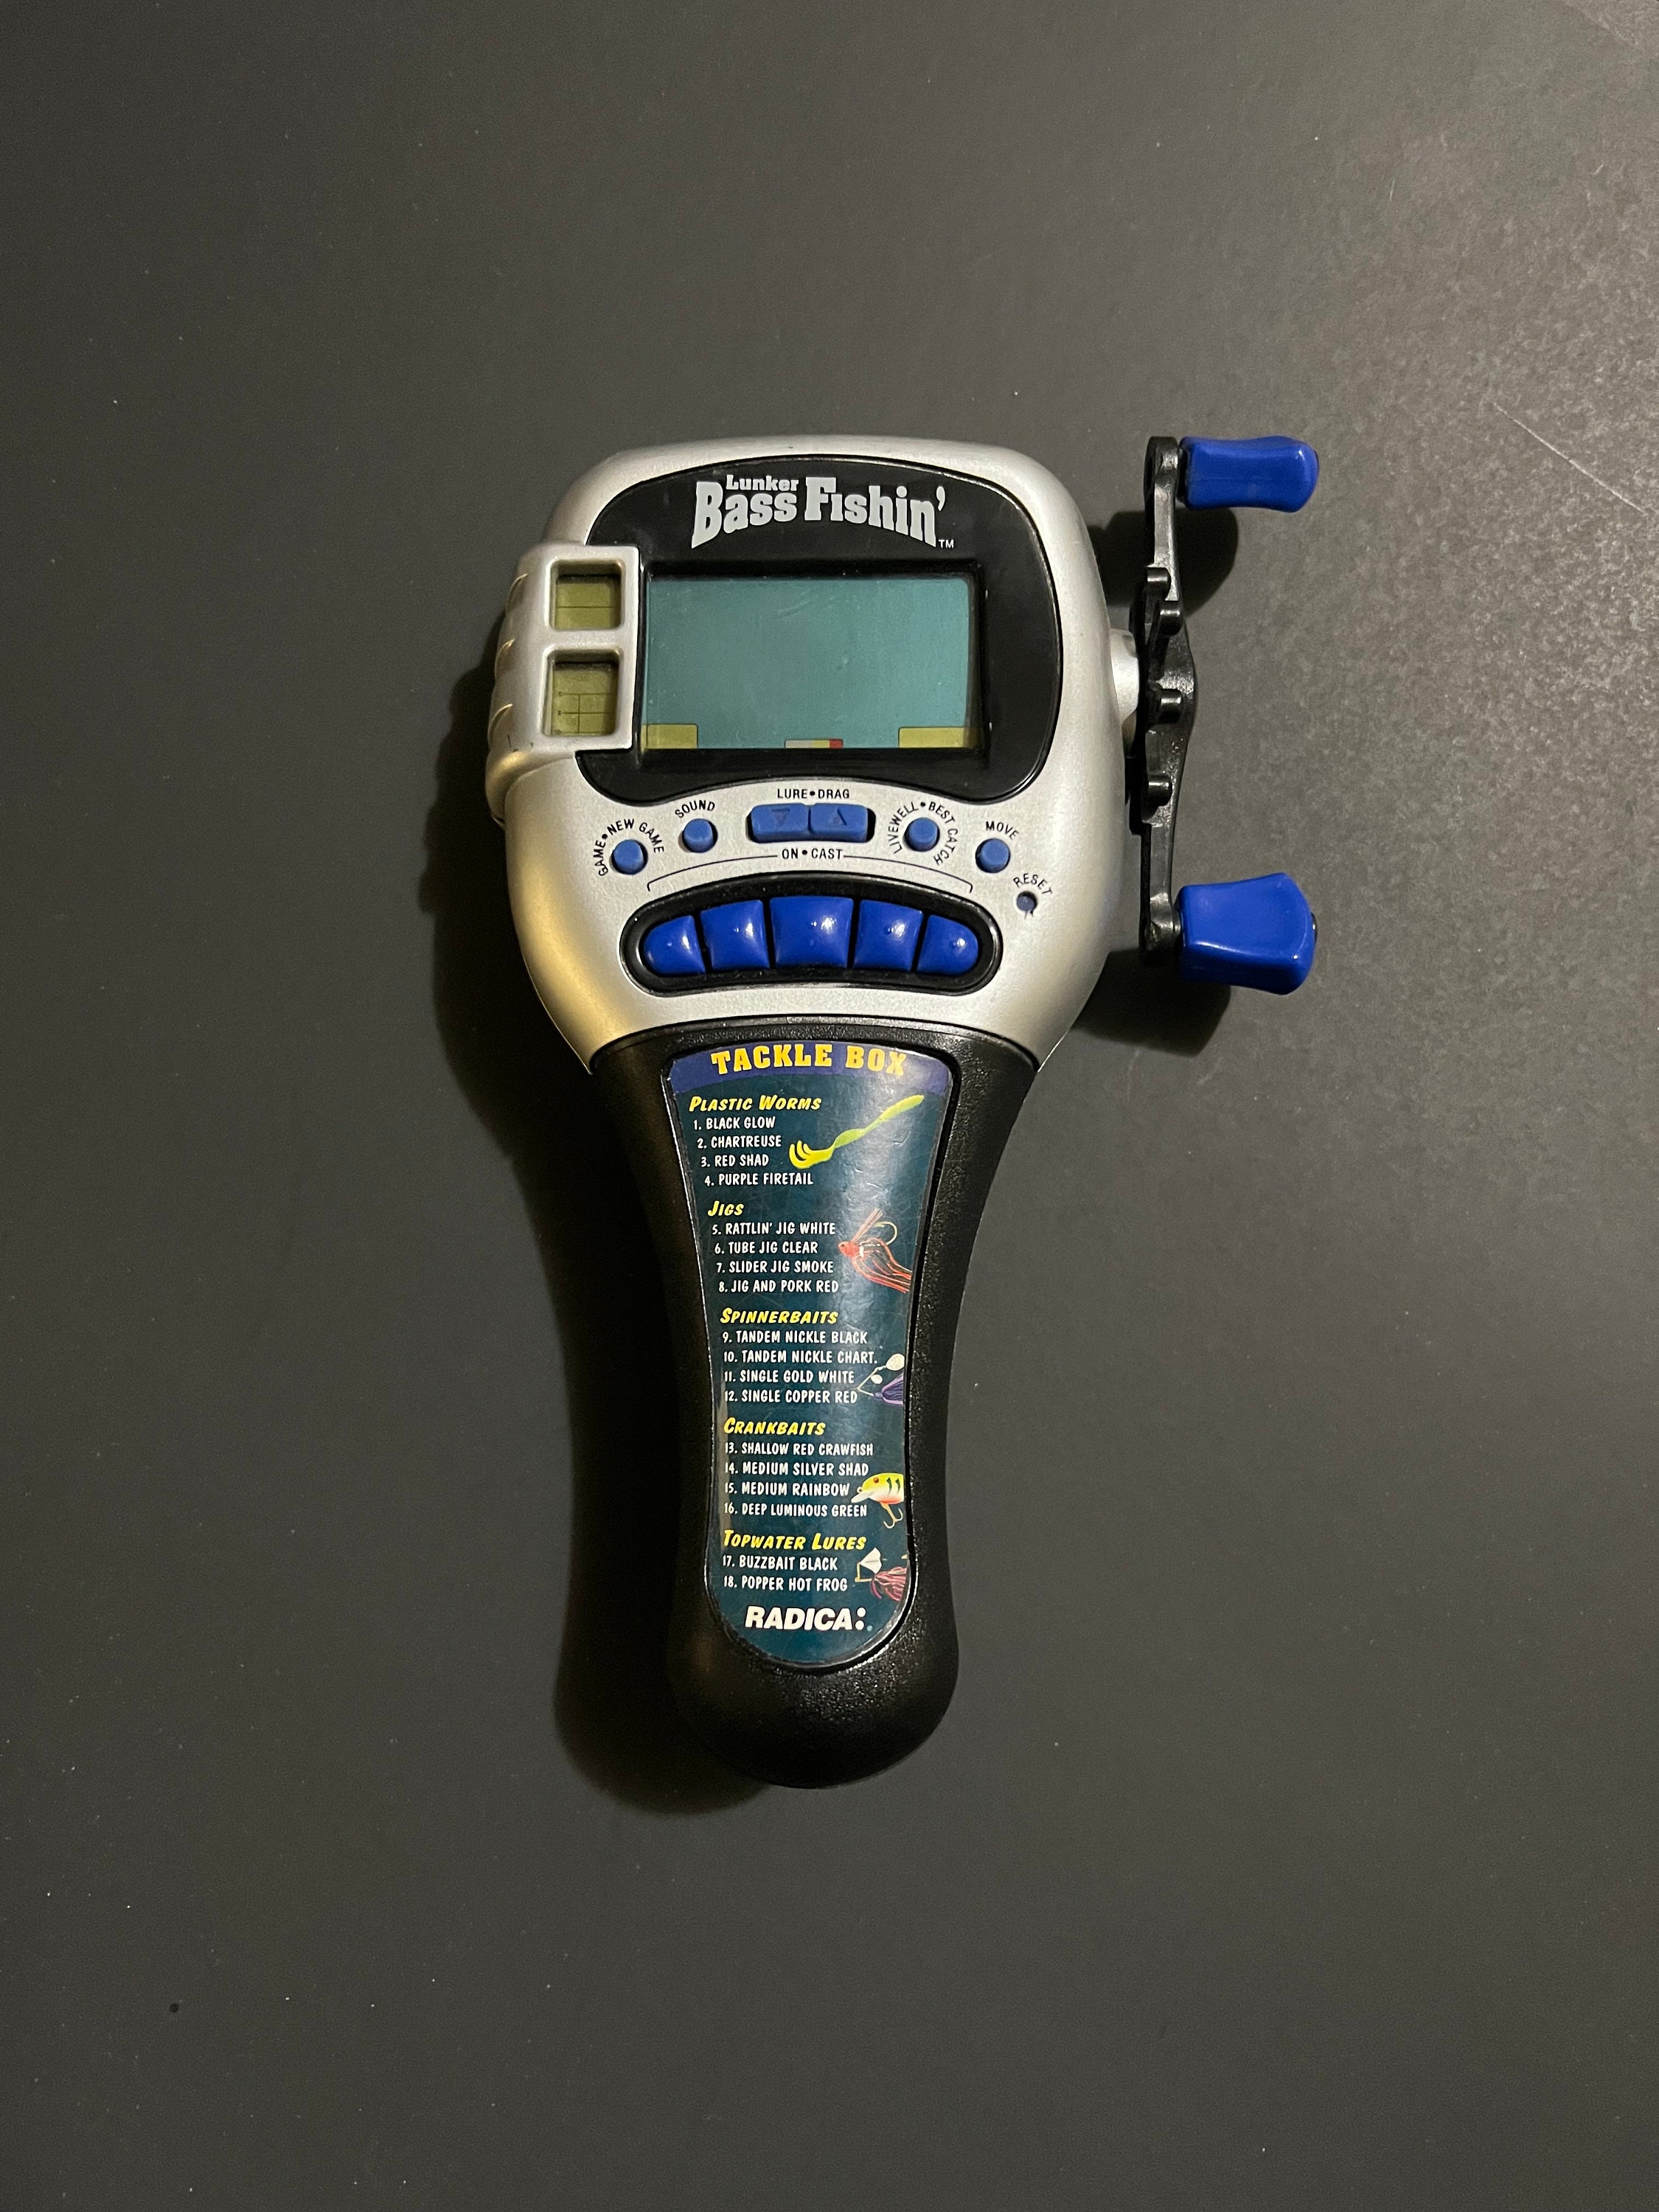 Electronic Handheld Lunker Bass Fishin' Game Radica Fishing 1997